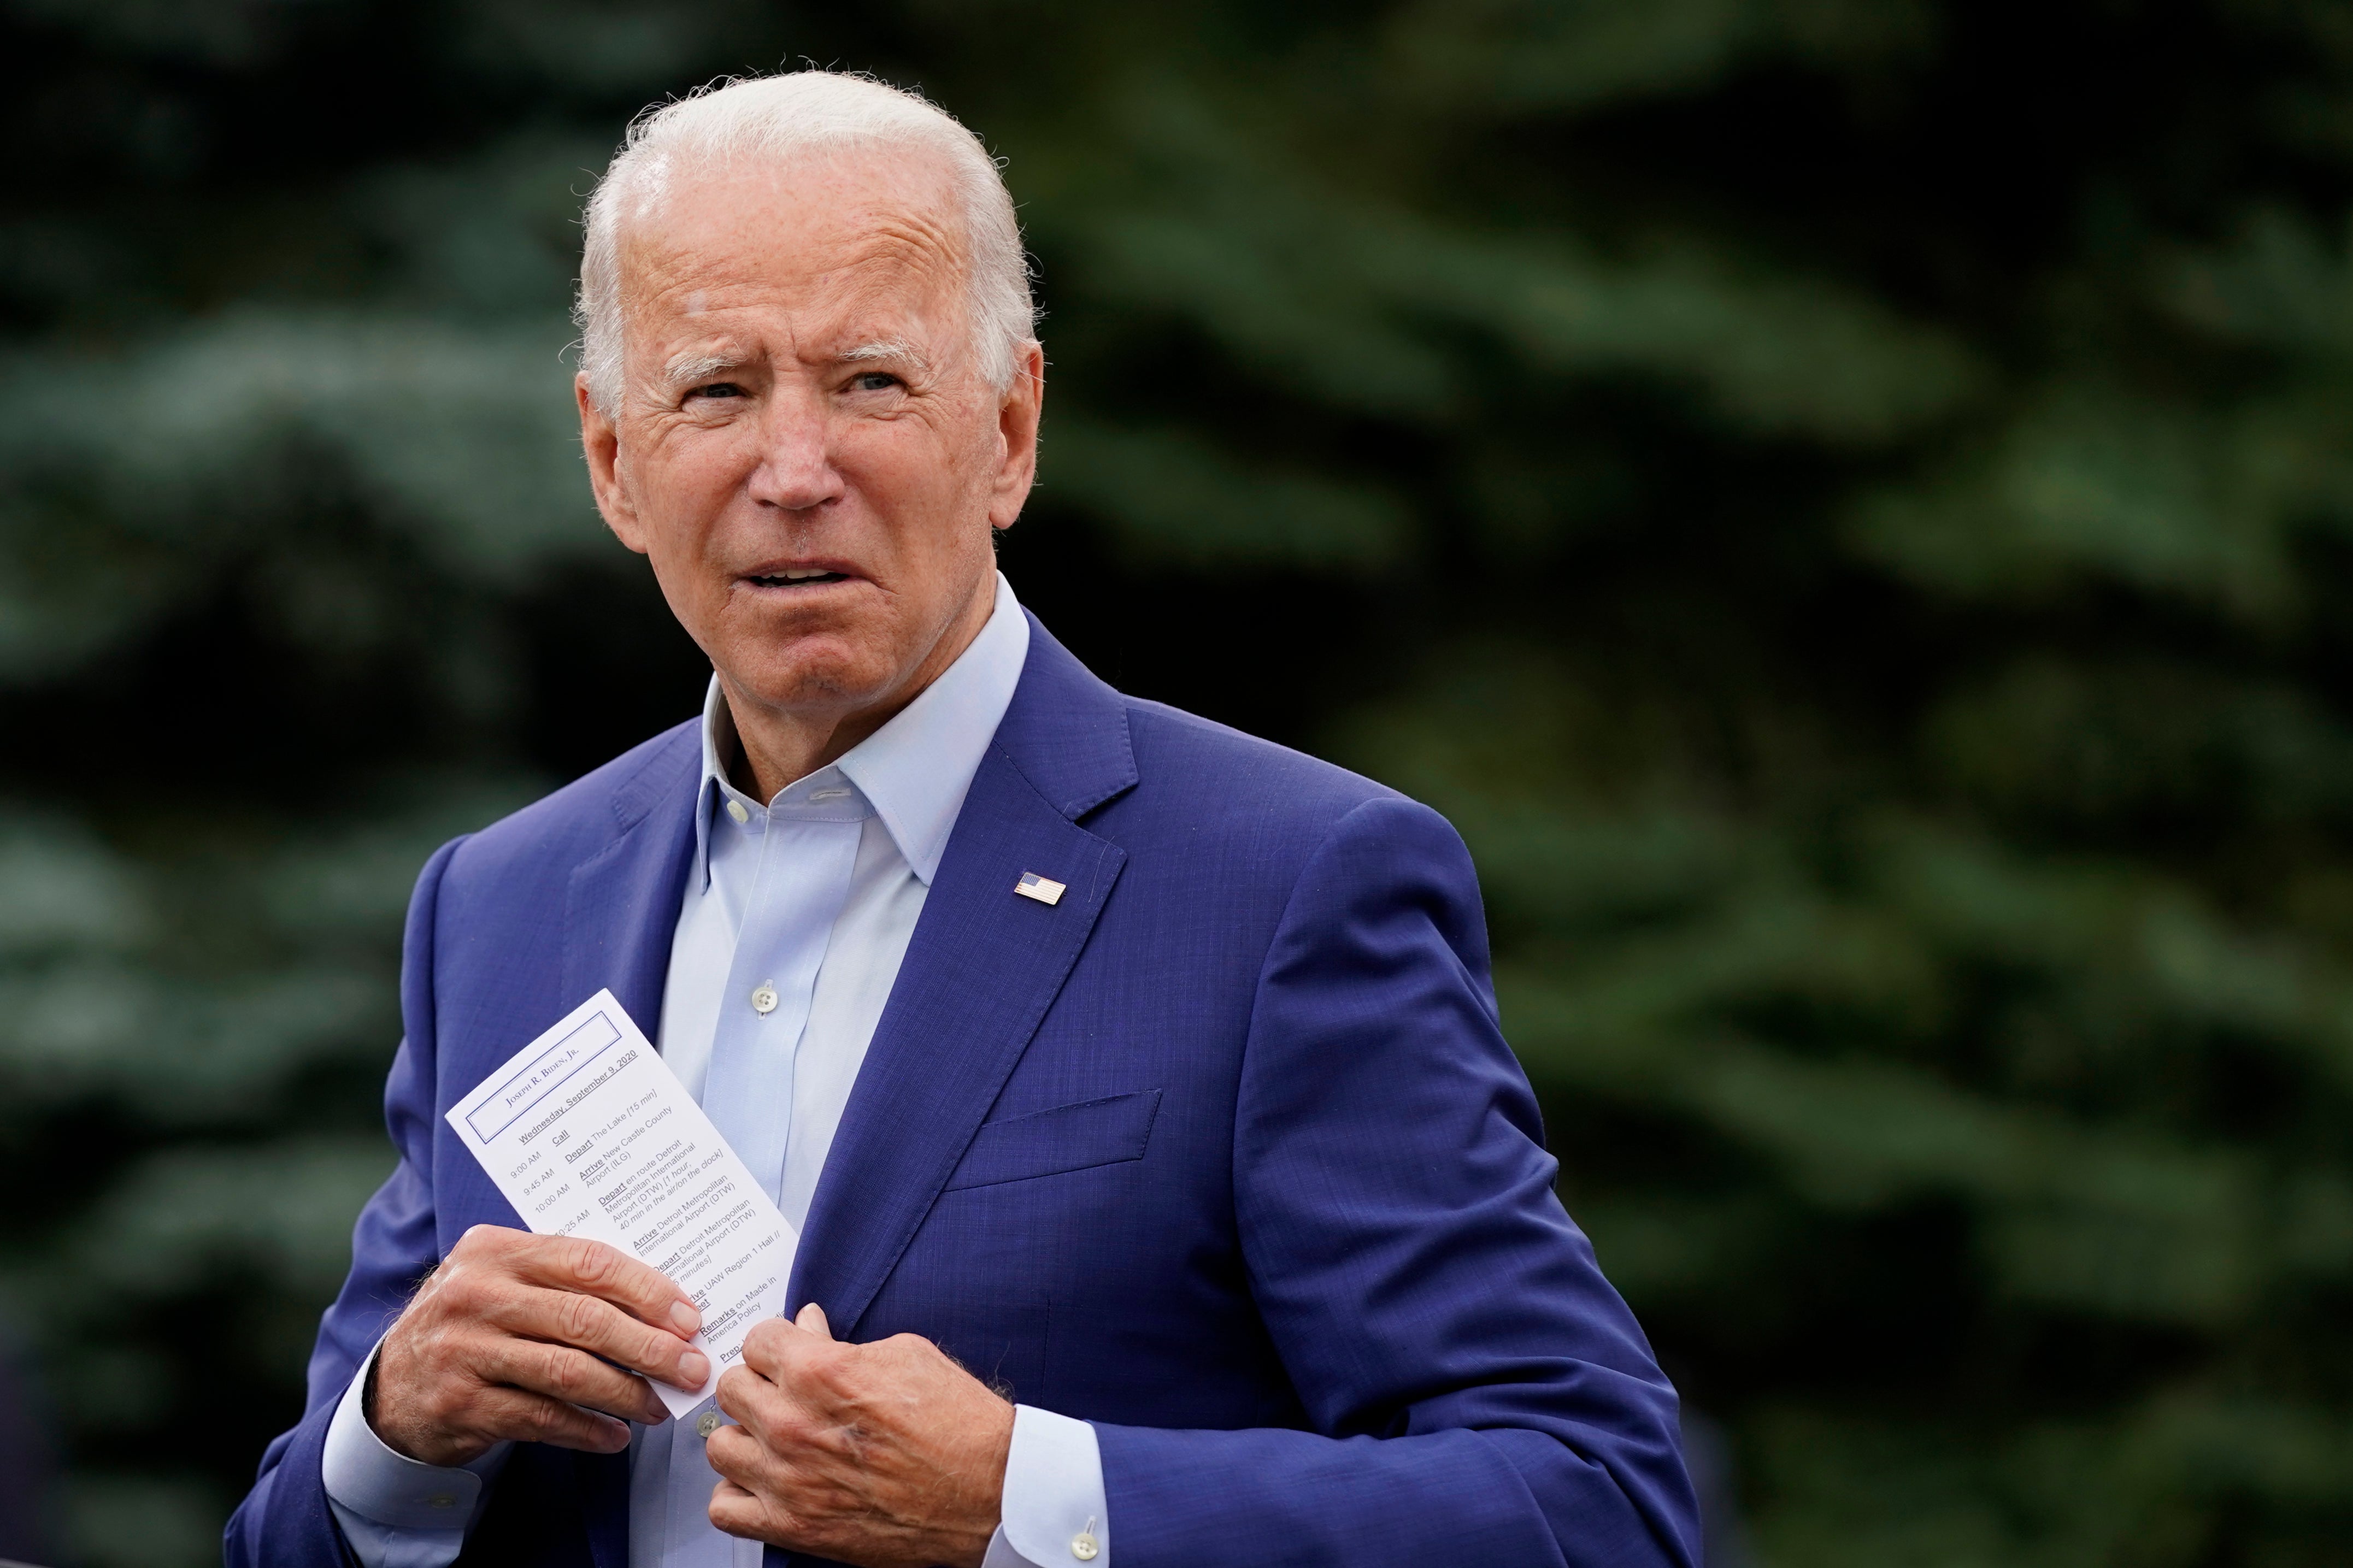 The Democratic presidential nominee, Joe Biden, attacks Donald Trump on national security